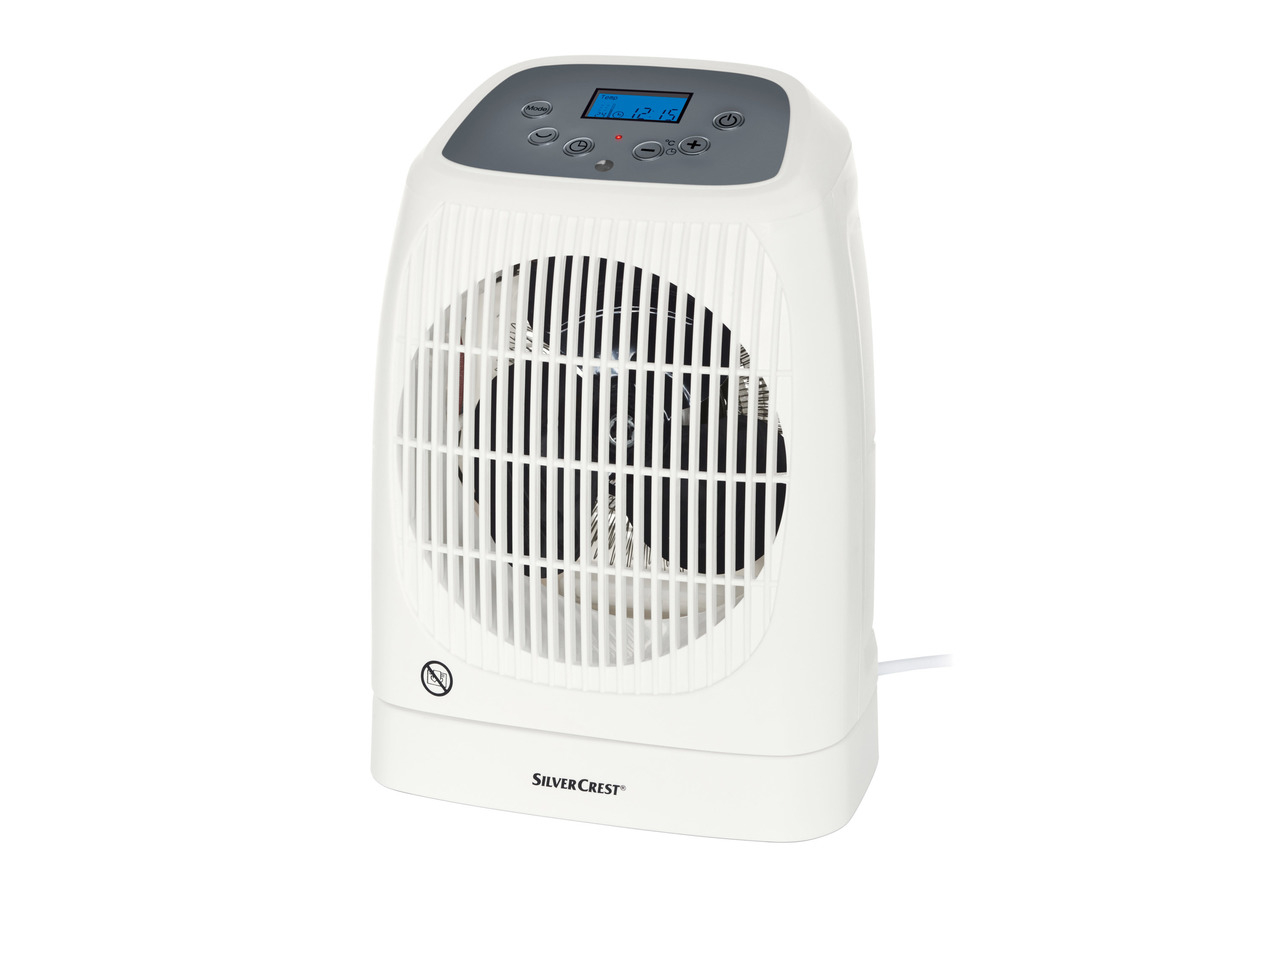 Silvercrest 10002000w Fan Heater With Remote Control Lidl regarding dimensions 1278 X 959